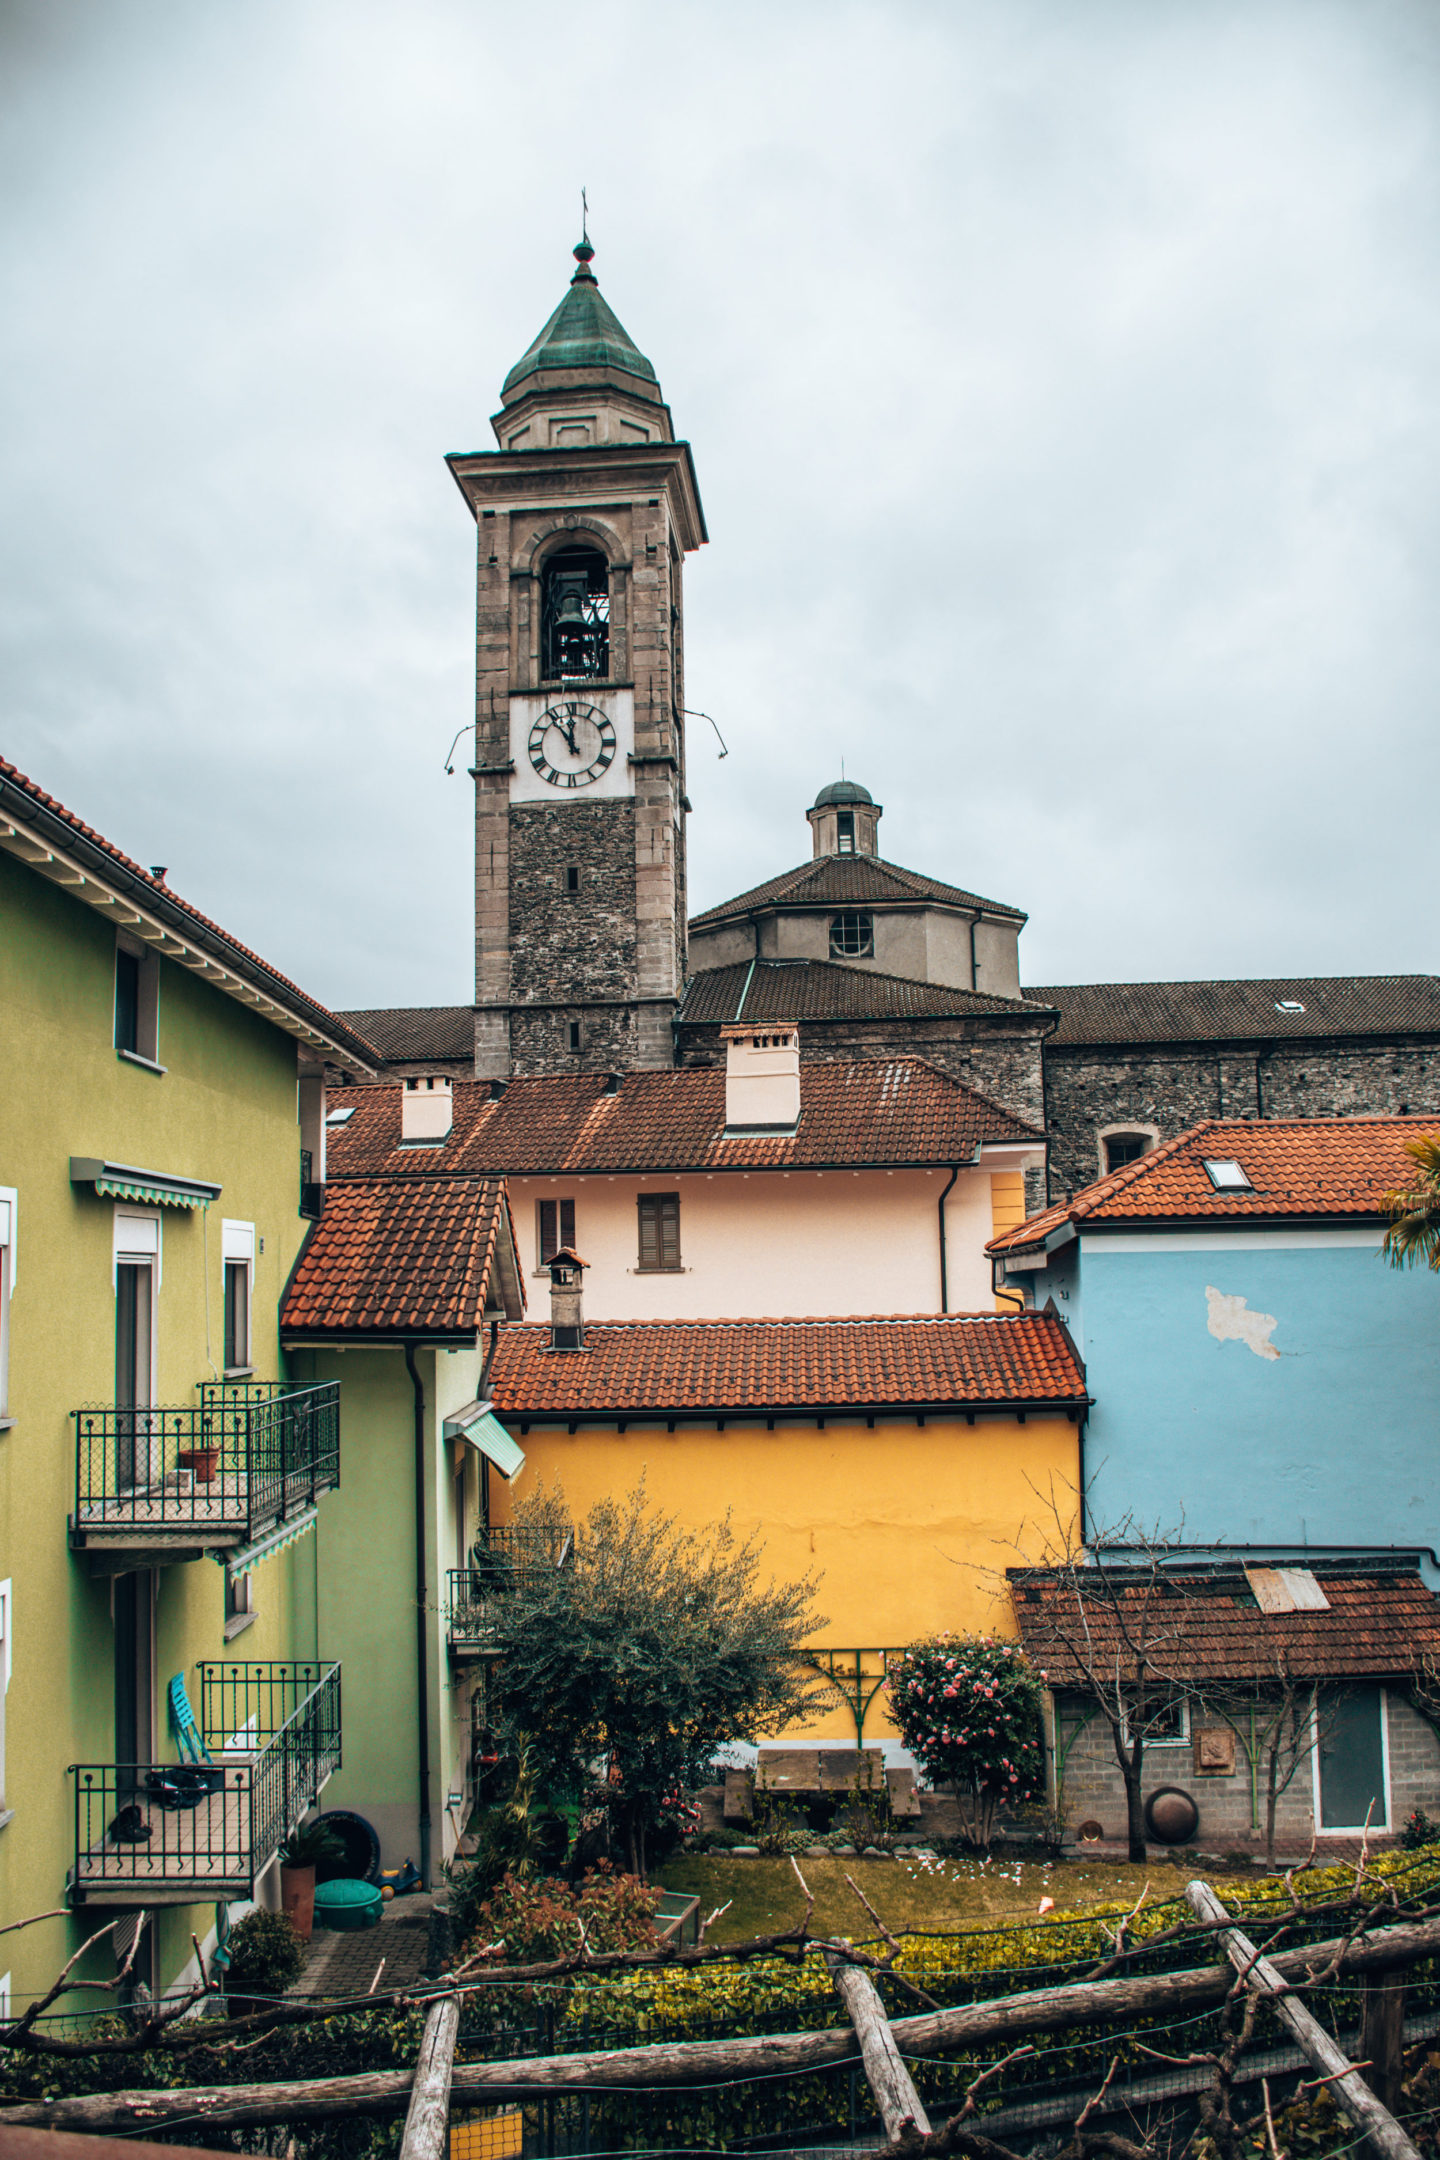 Sonnenkanton Tessin: Zu Besuch in Locarno und Lavertezzo